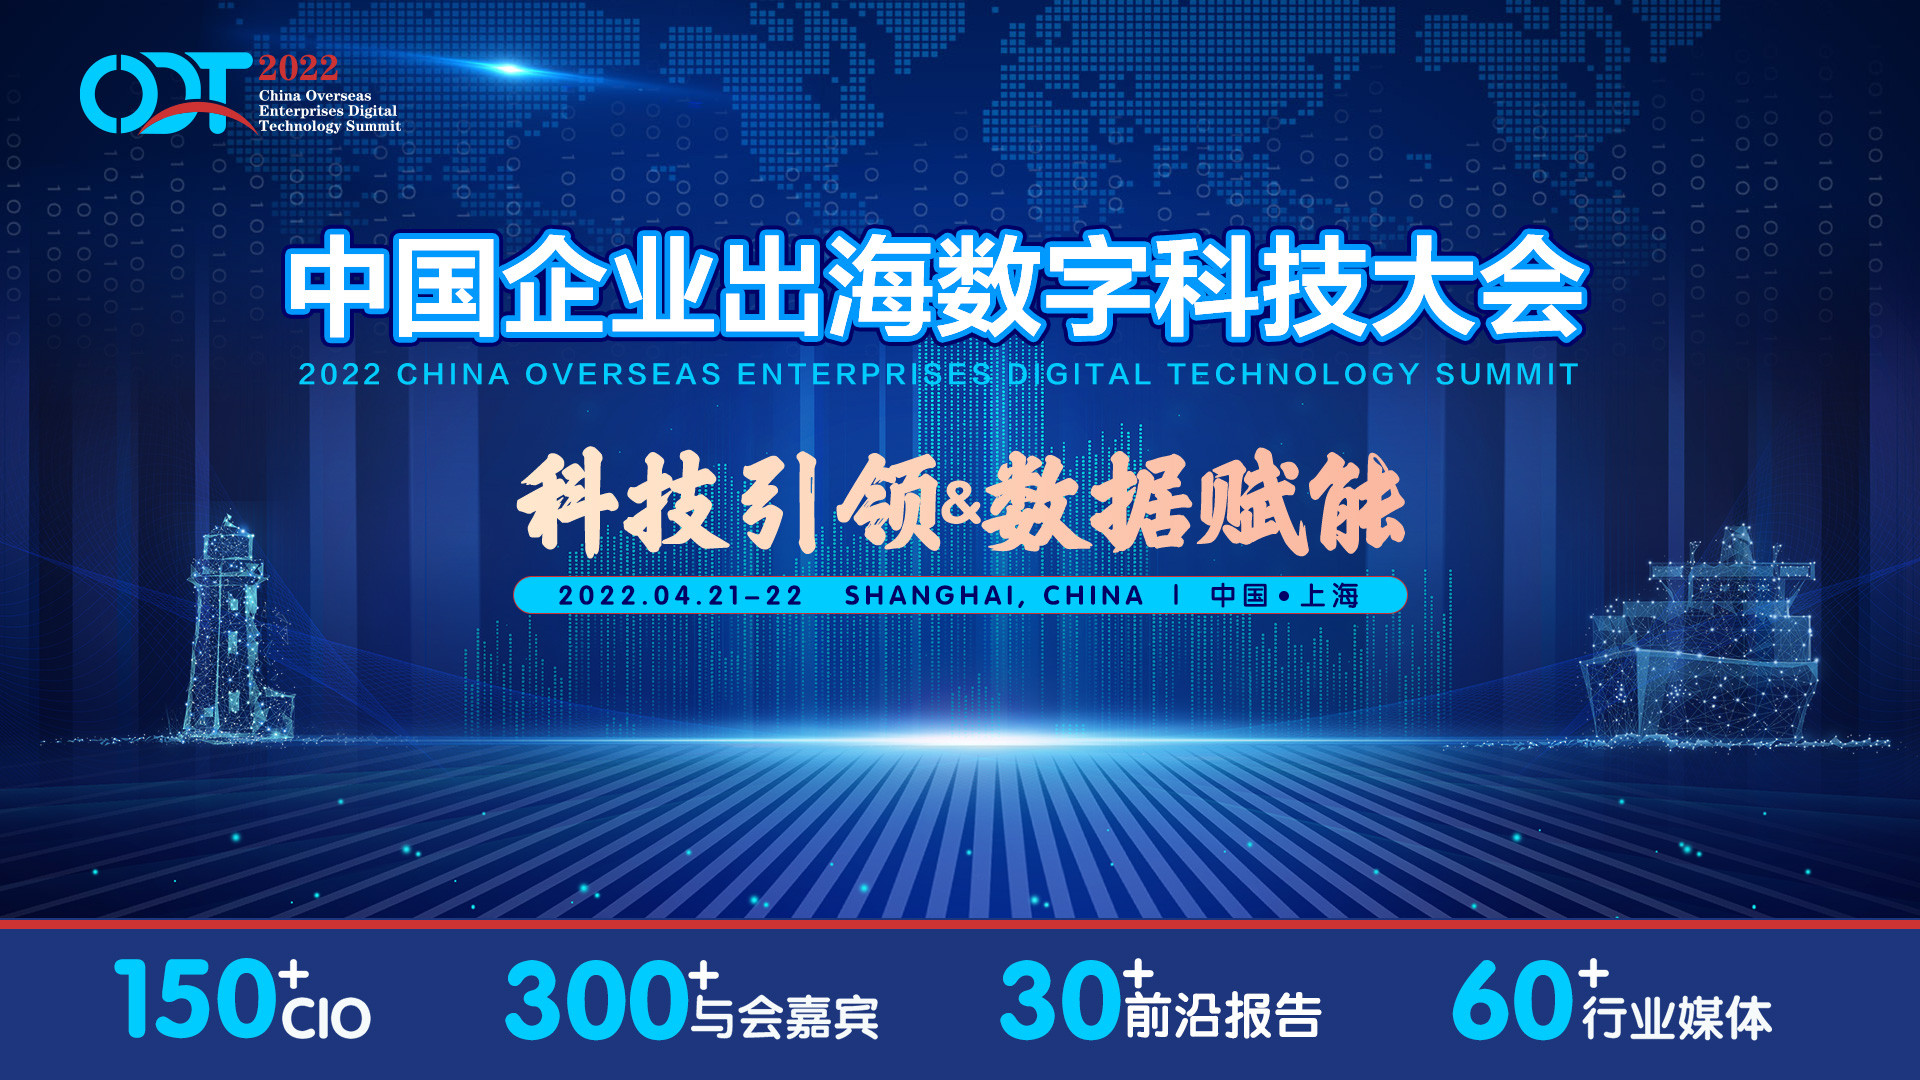 ODT 2022中國企業出海數字科技大會